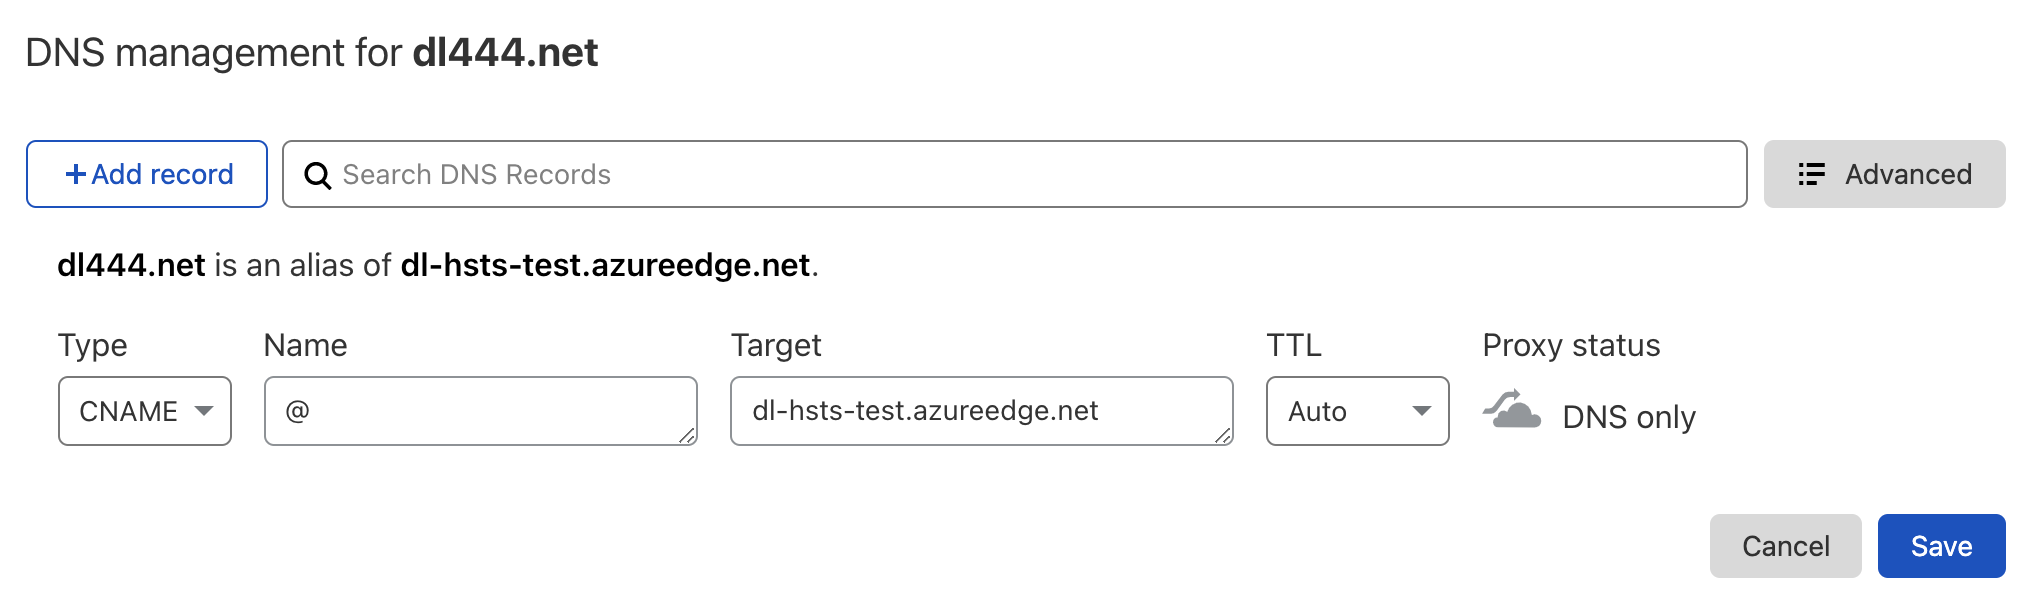 为域名 Apex 创建指向 dl-hsts-test.azureedge.net 的 CNAME 记录